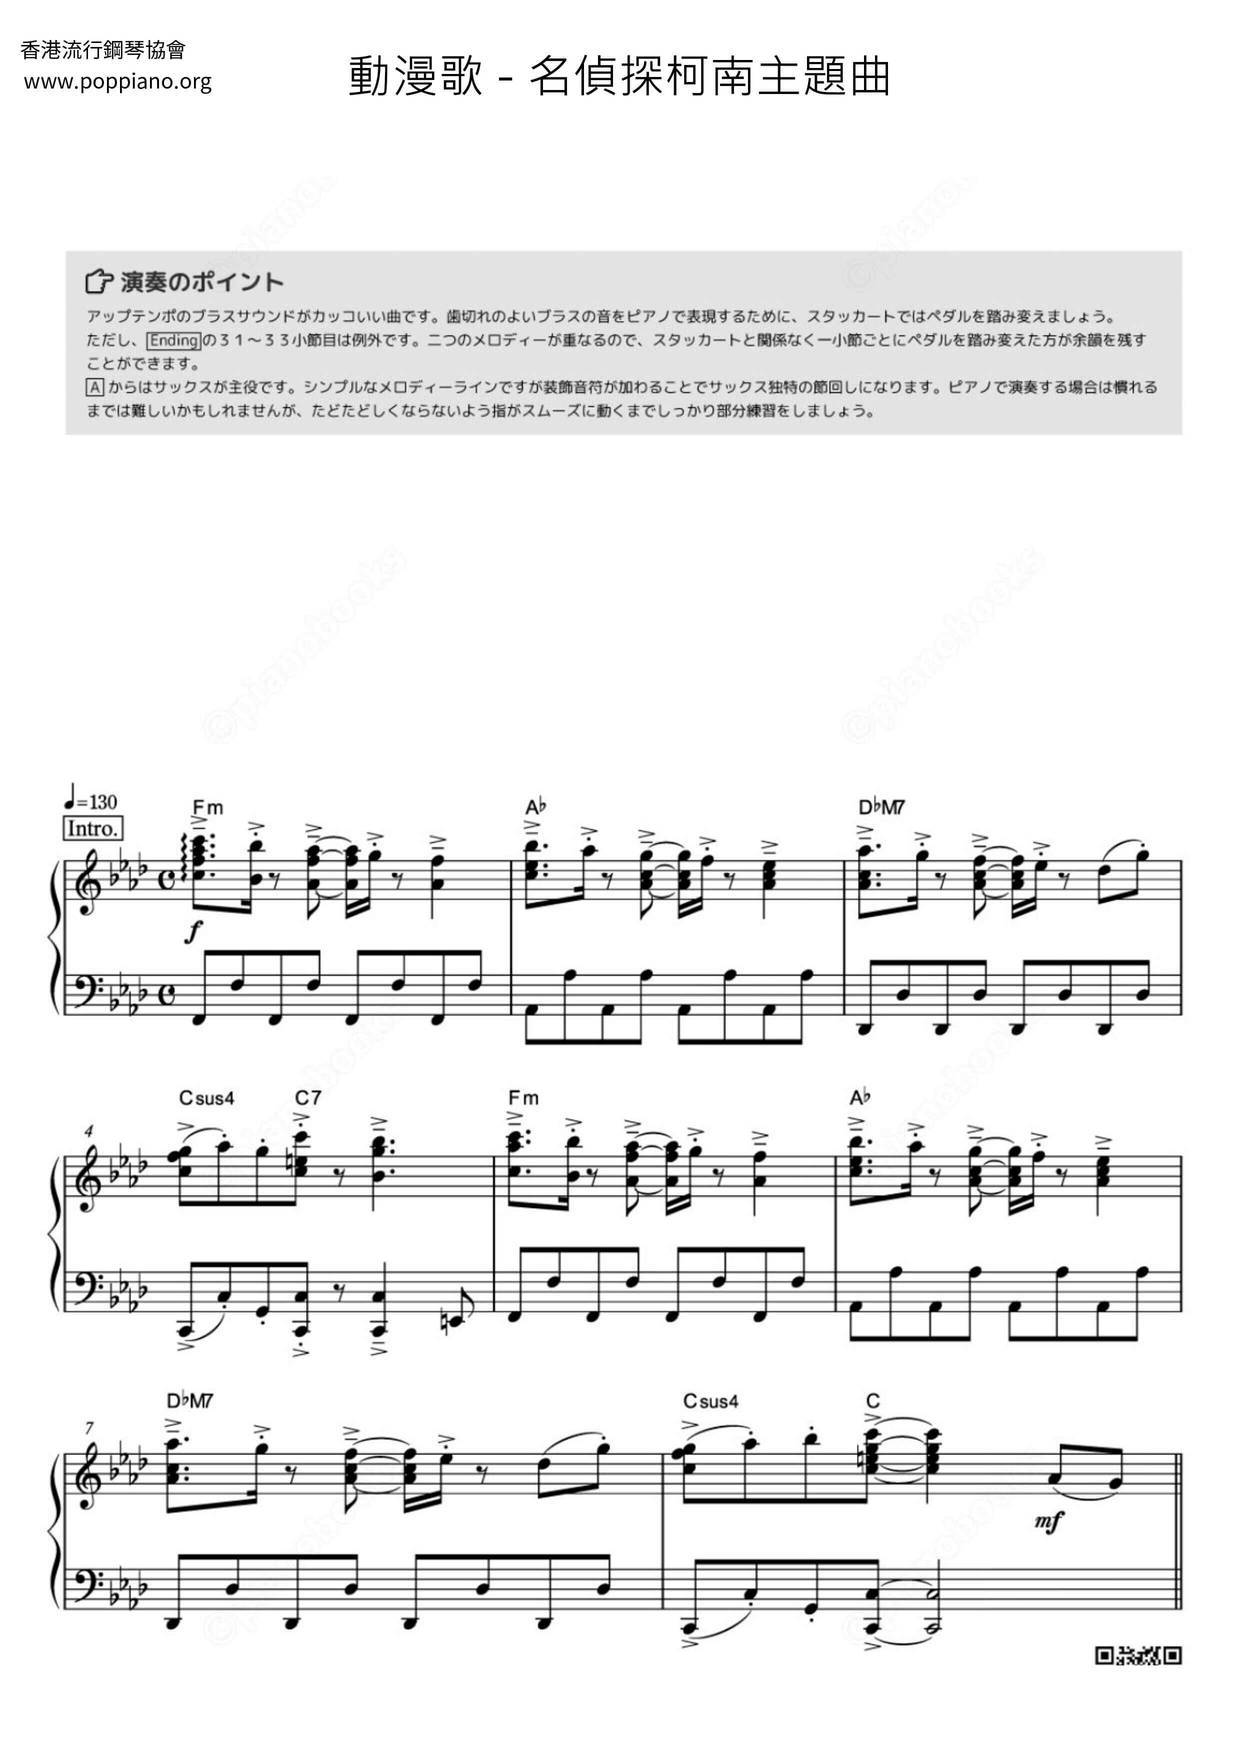 Anime Detective Conan Main Theme Sheet Music Pdf 名探偵コナンメイン テーマ 楽譜 アニメソング Free Score Download